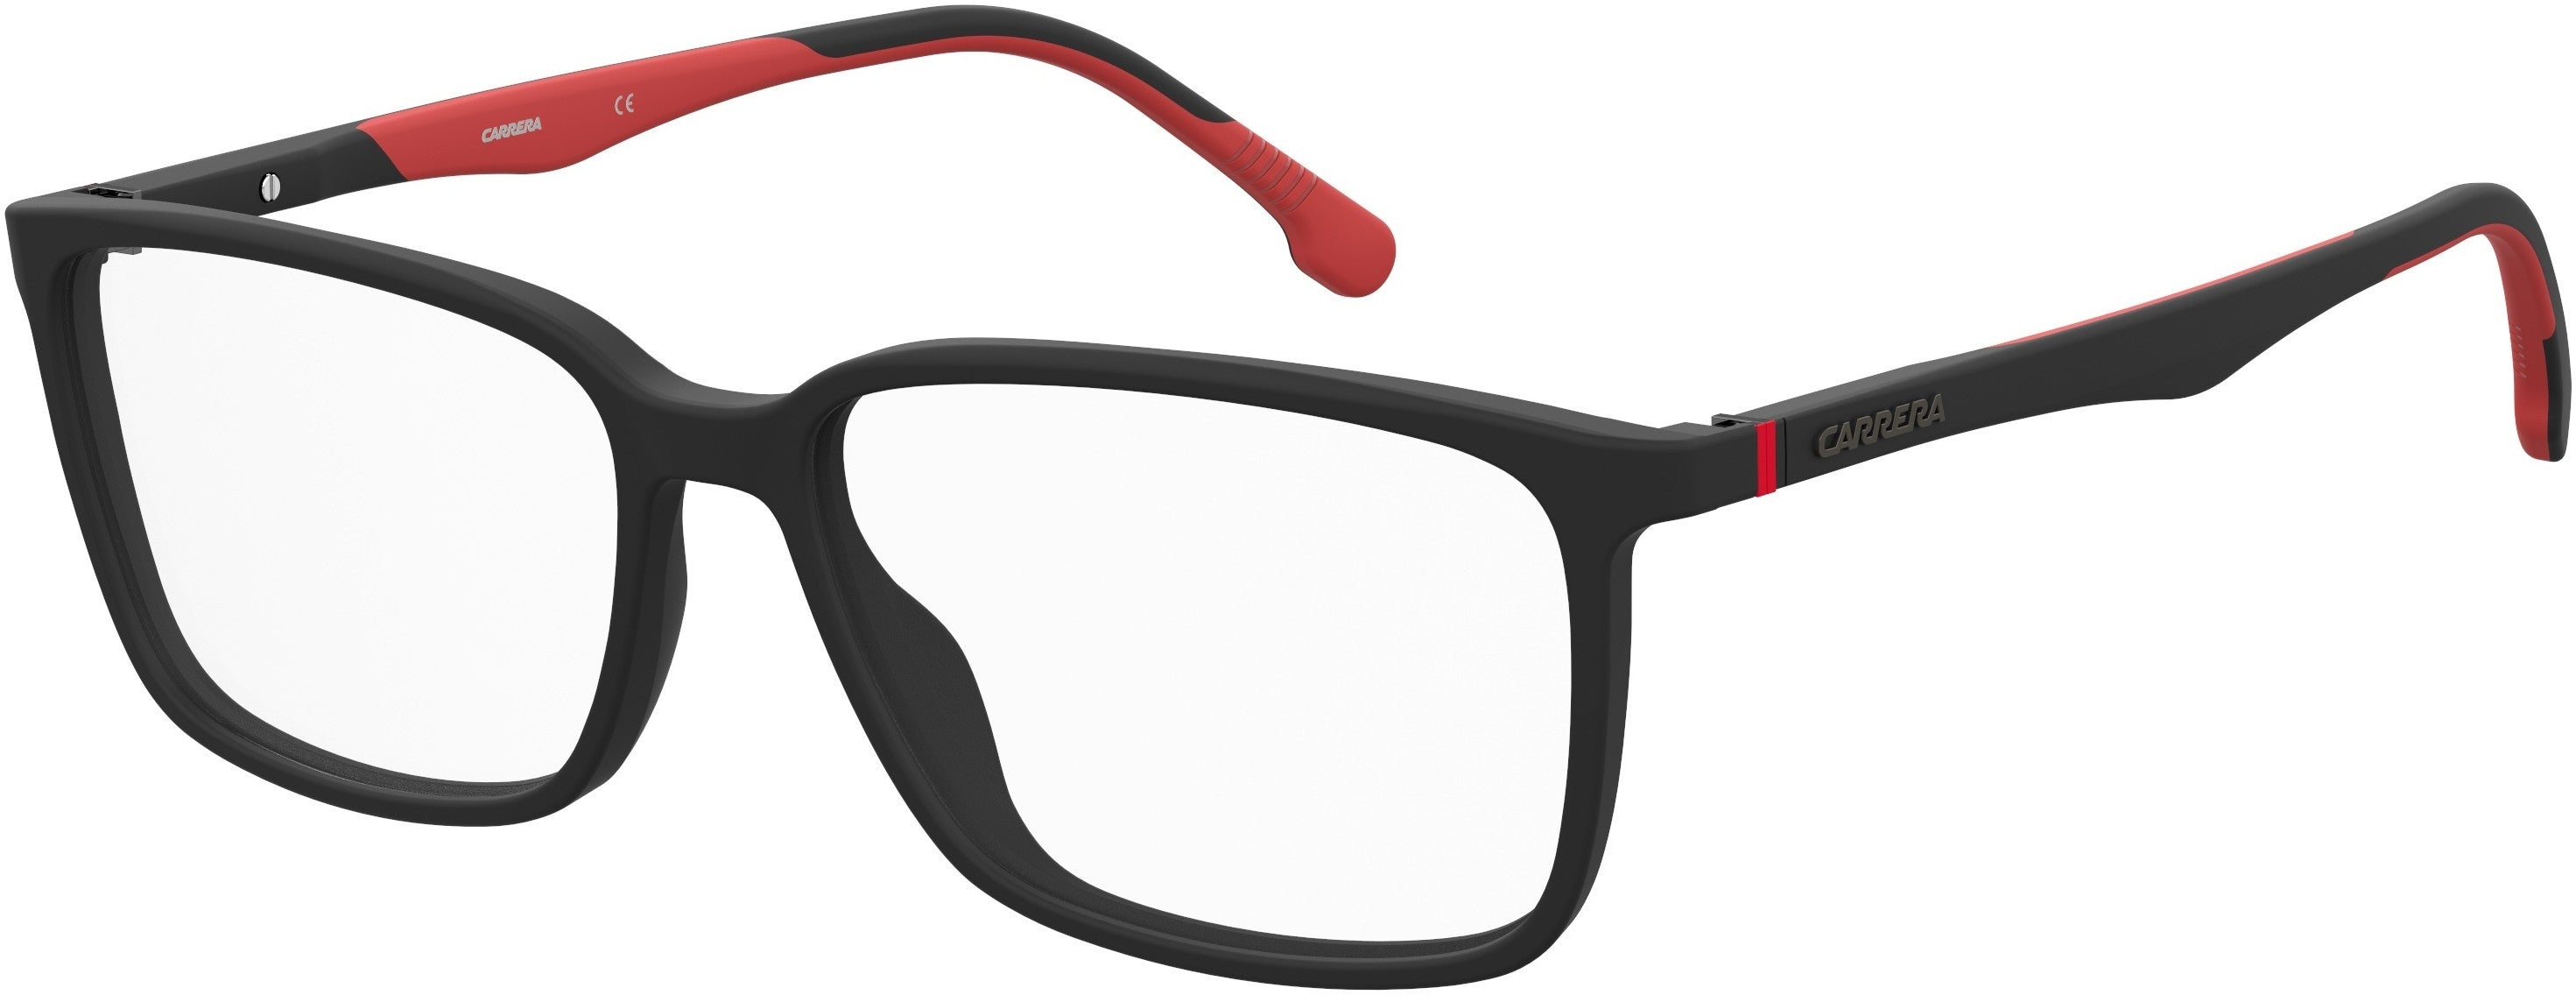  Carrera 8856 Rectangular Eyeglasses 0003-0003  Matte Black (00 Demo Lens)